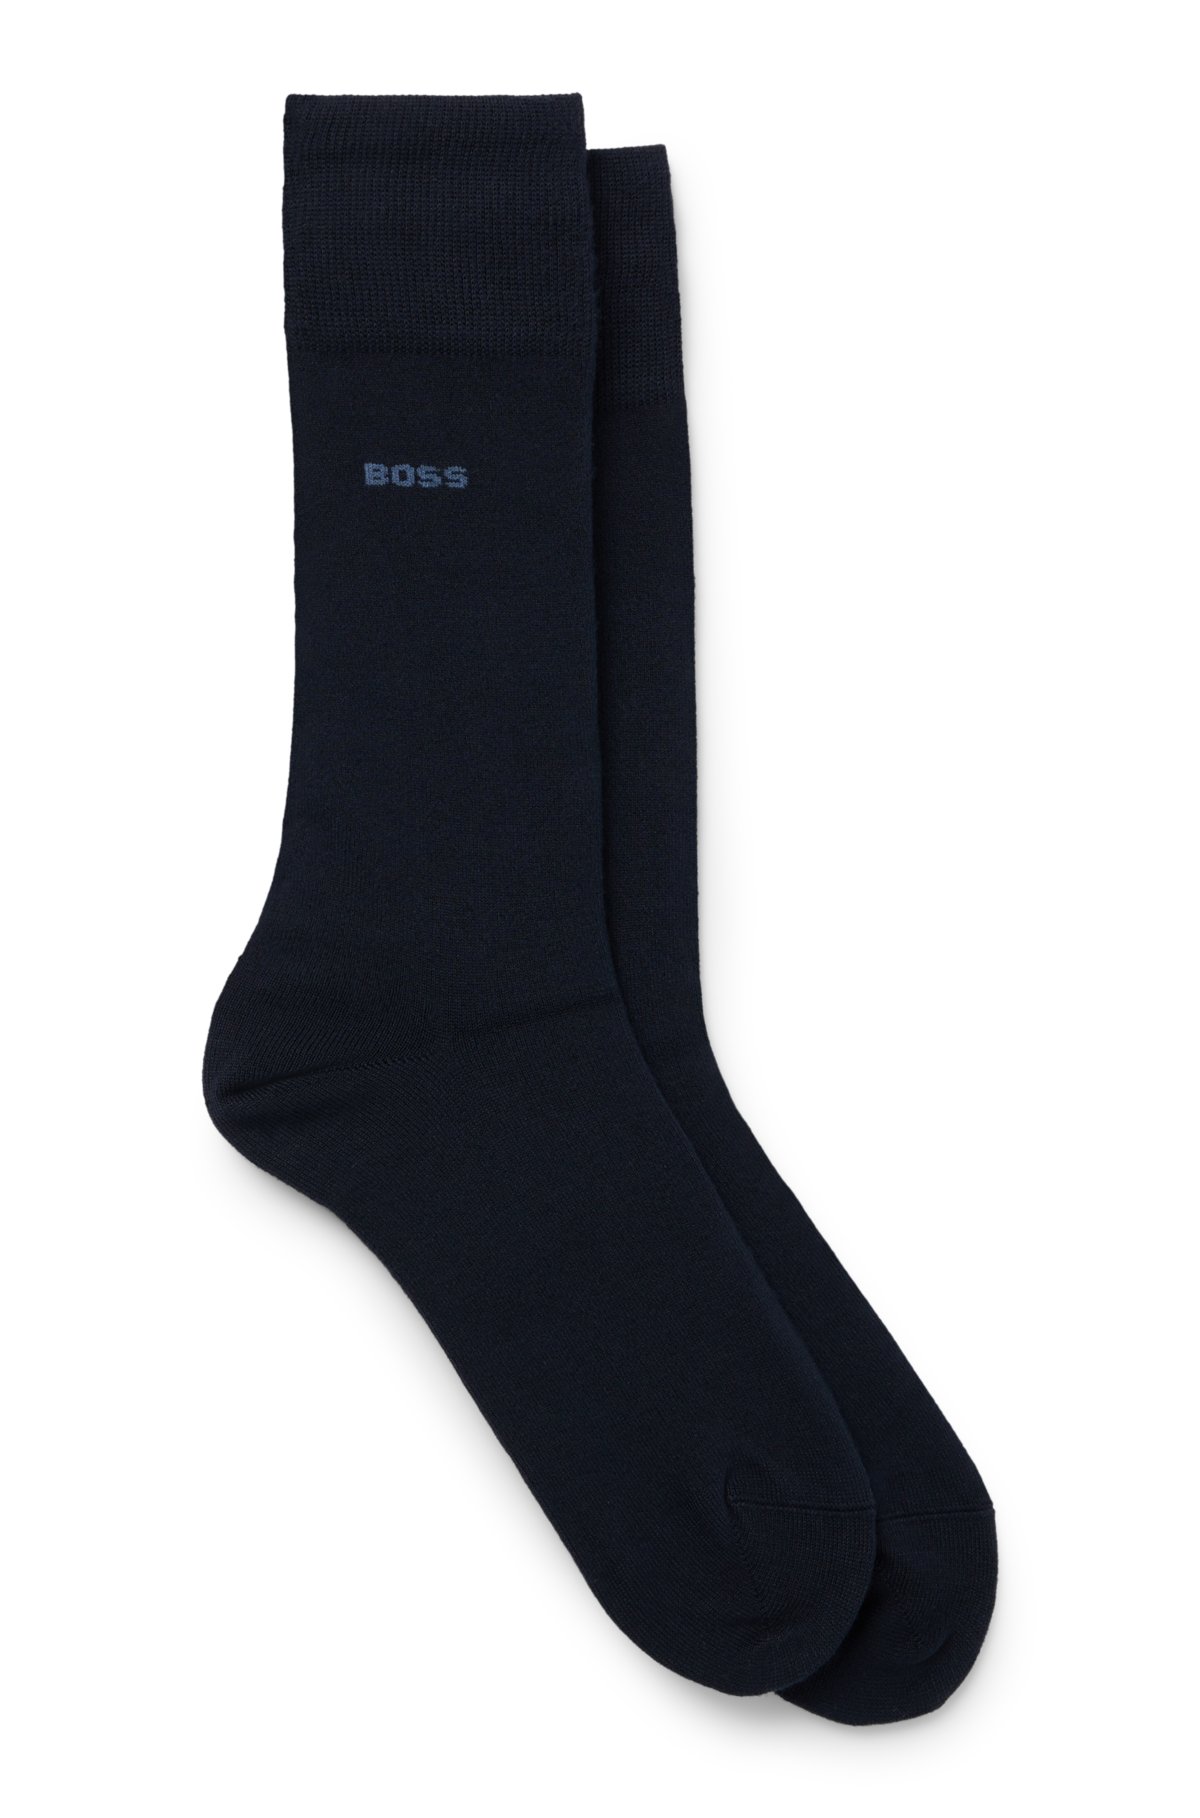 BOSS - Two-pack of regular-length in yarns socks stretch